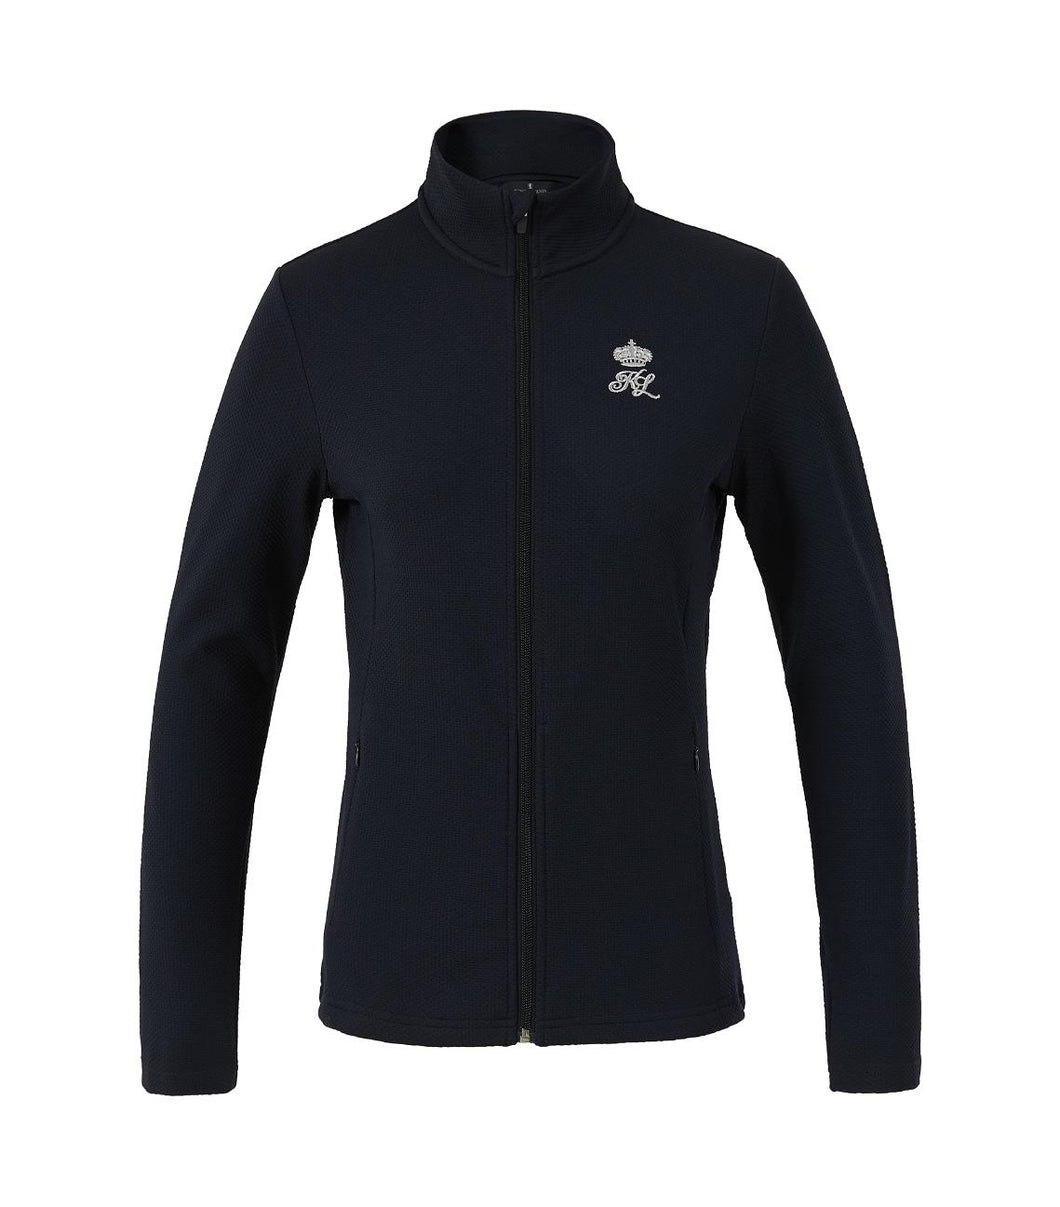 Kingsland fleece jacket - Navy SALE